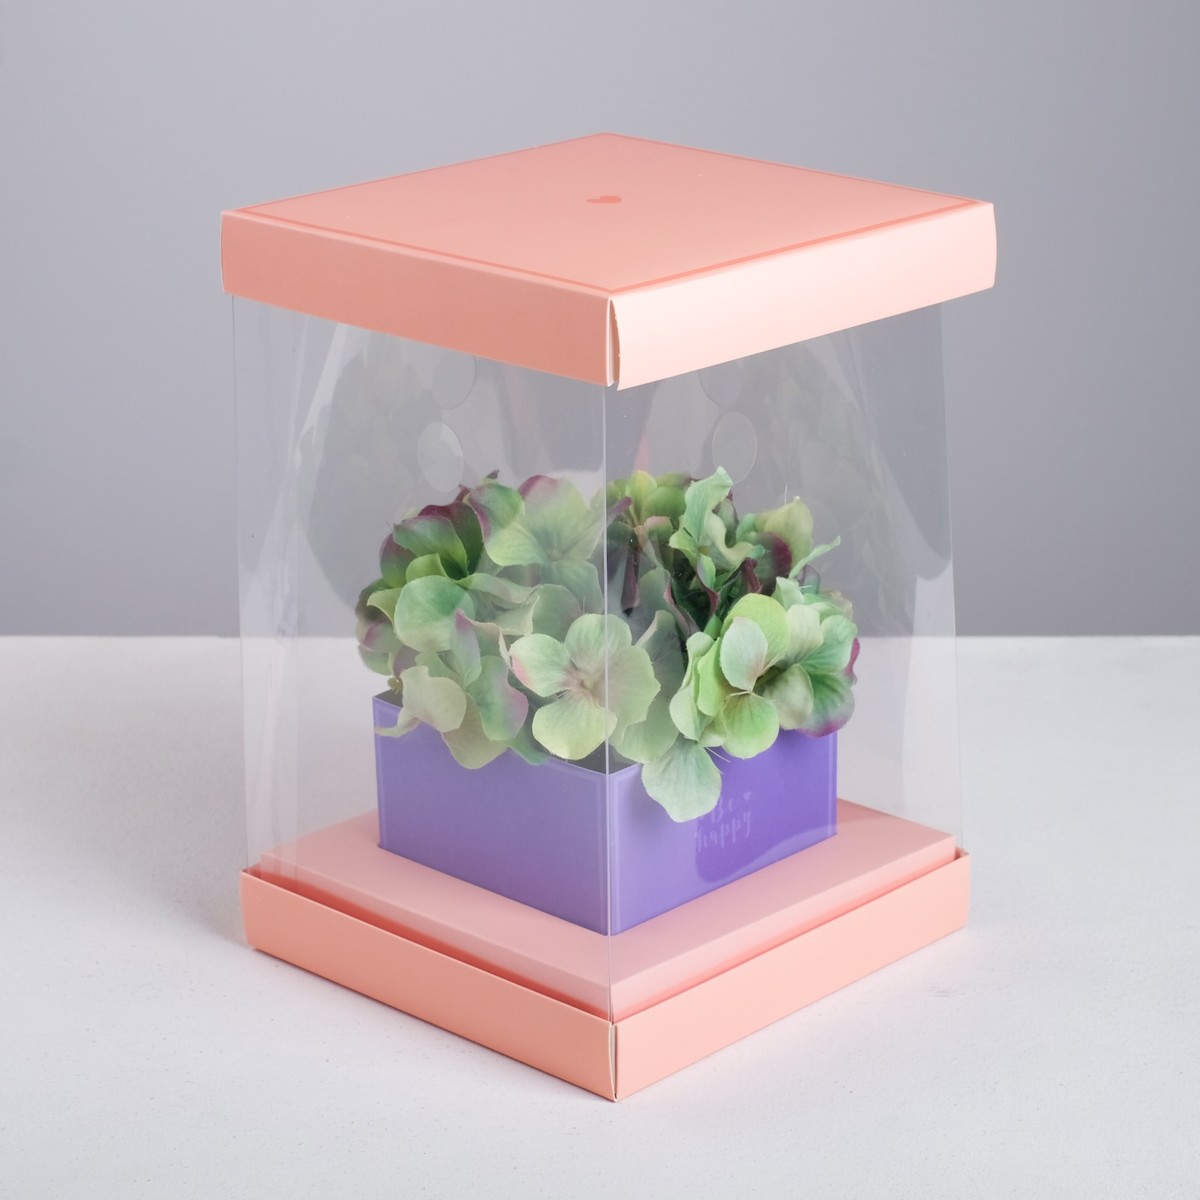 Коробка подарочная для цветов с вазой и pvc окнами складная, упаковка, коробка для ов с вазой и pvc окнами складная розовый 23 х 30 х 23 см